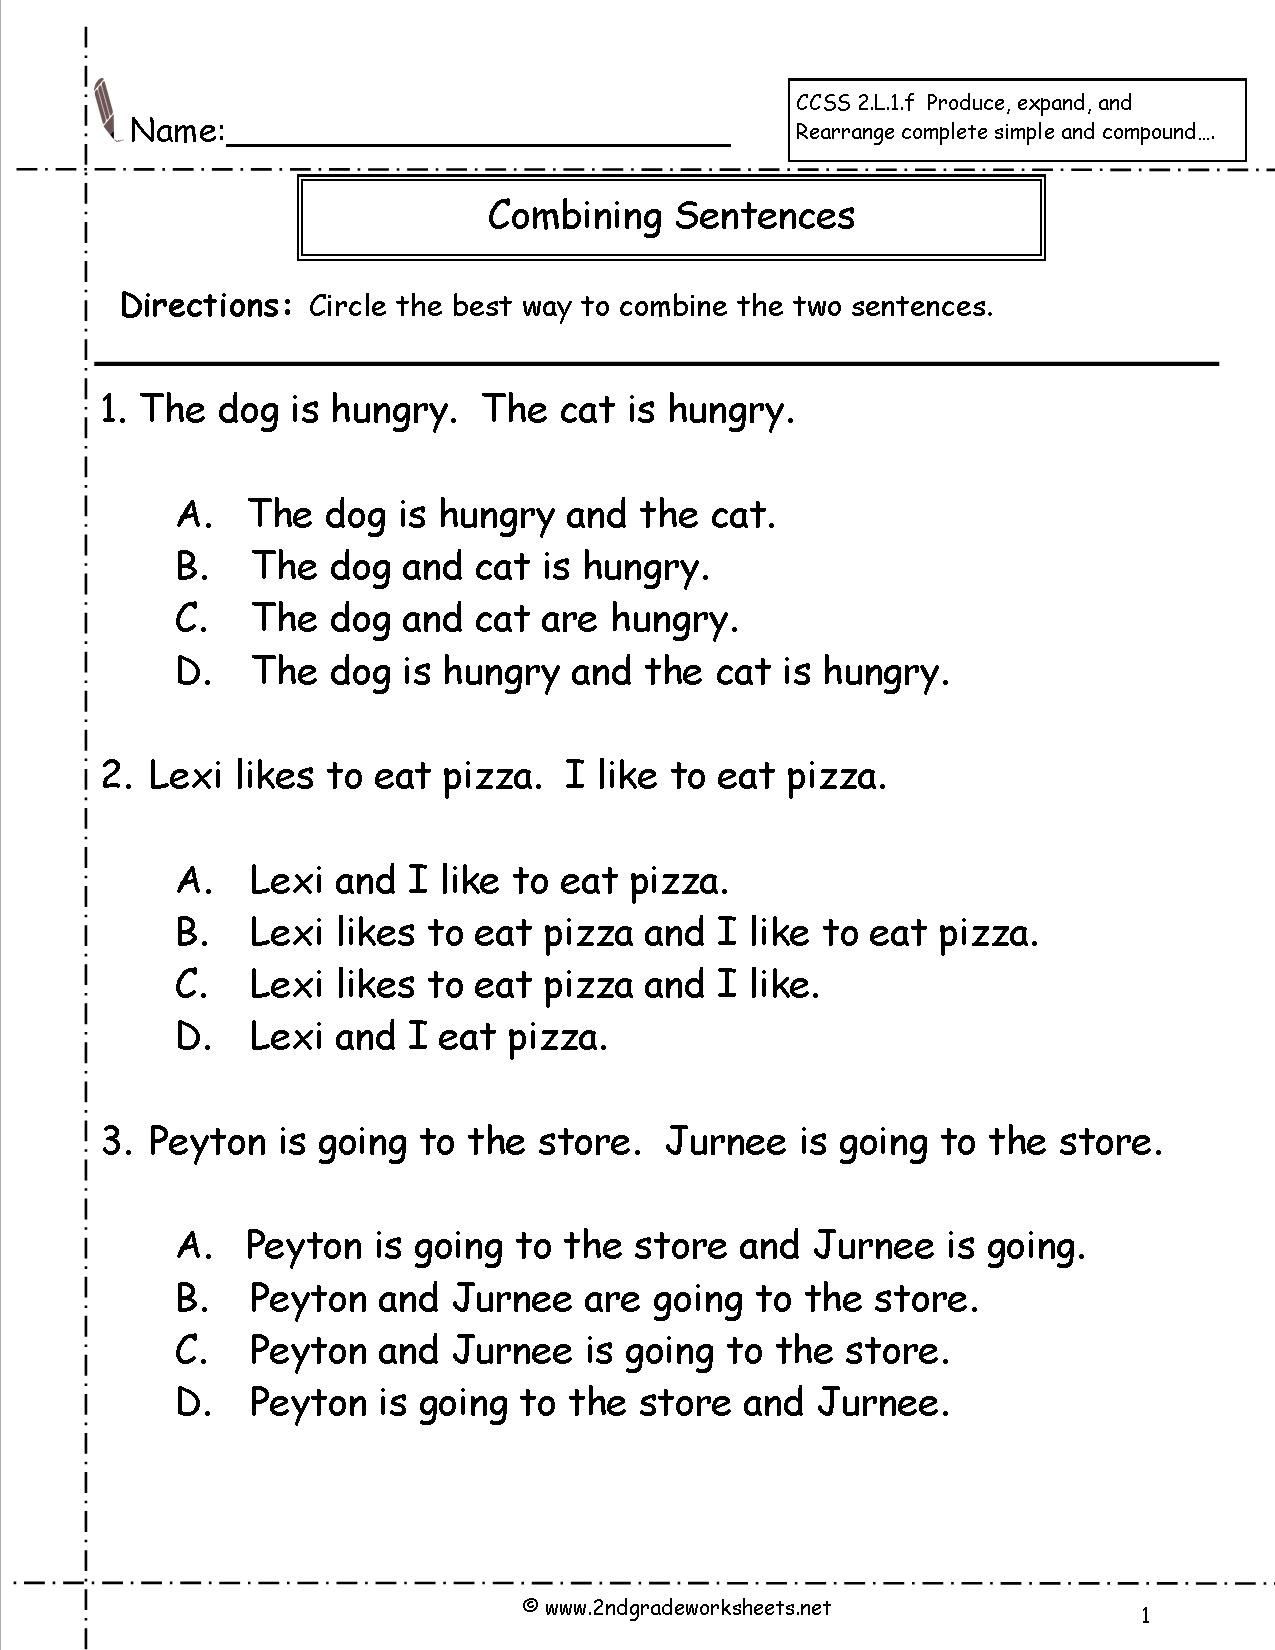 Combining Sentences Worksheet 5th Grade Bining Sentences Worksheet with Images